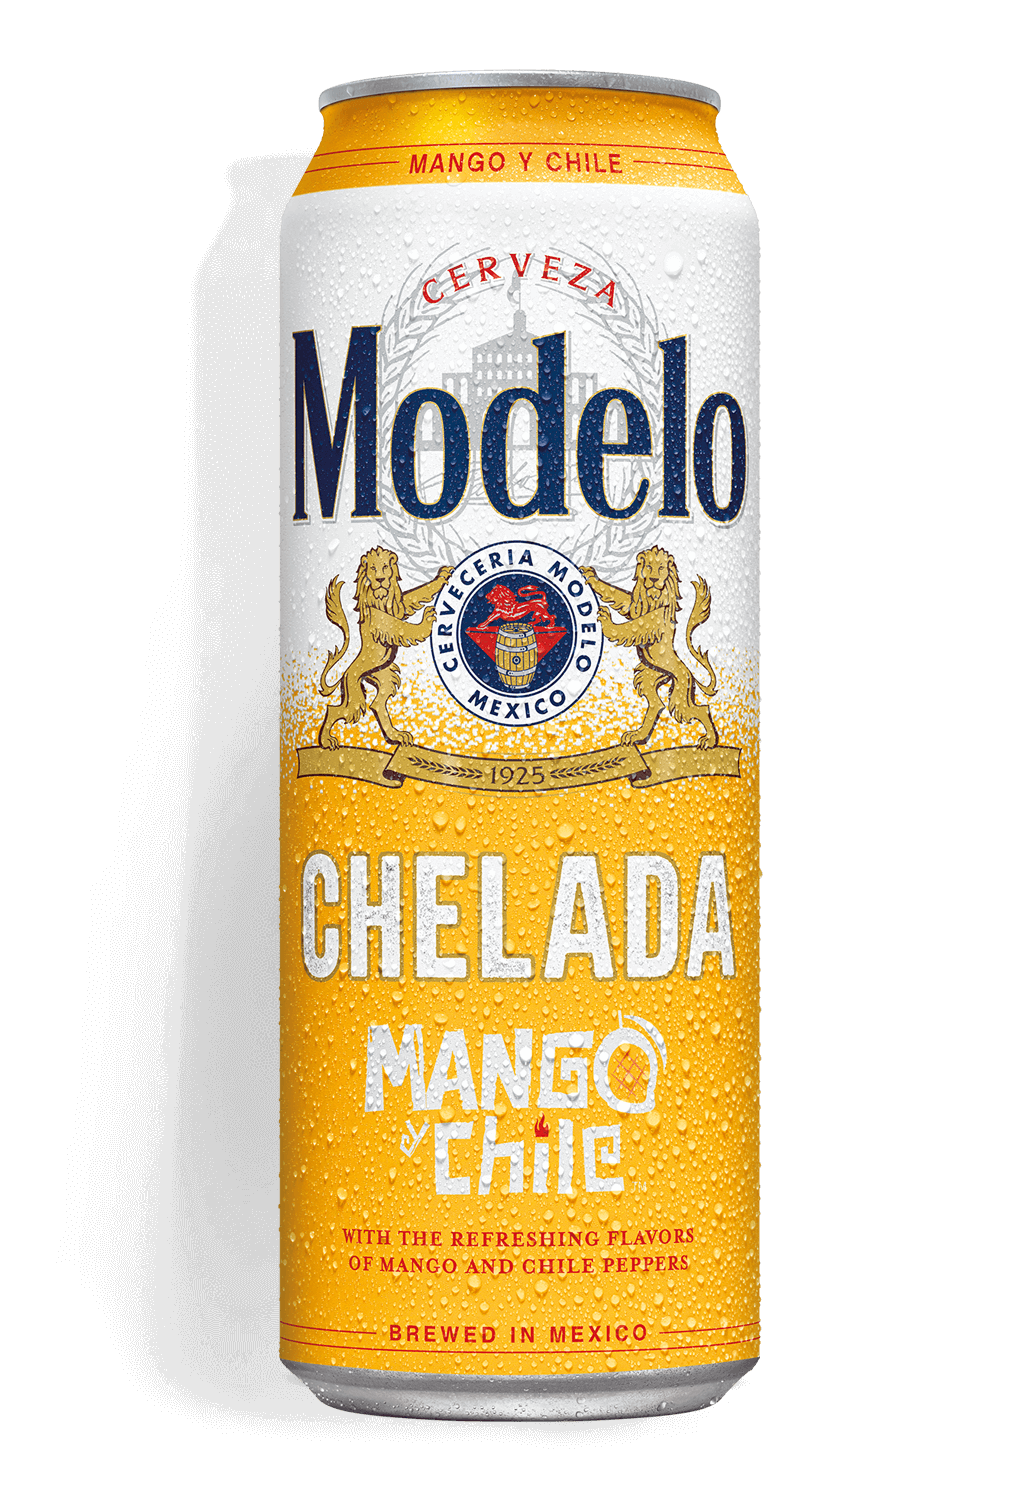 Modelo Chelada mango chile scroll bottle